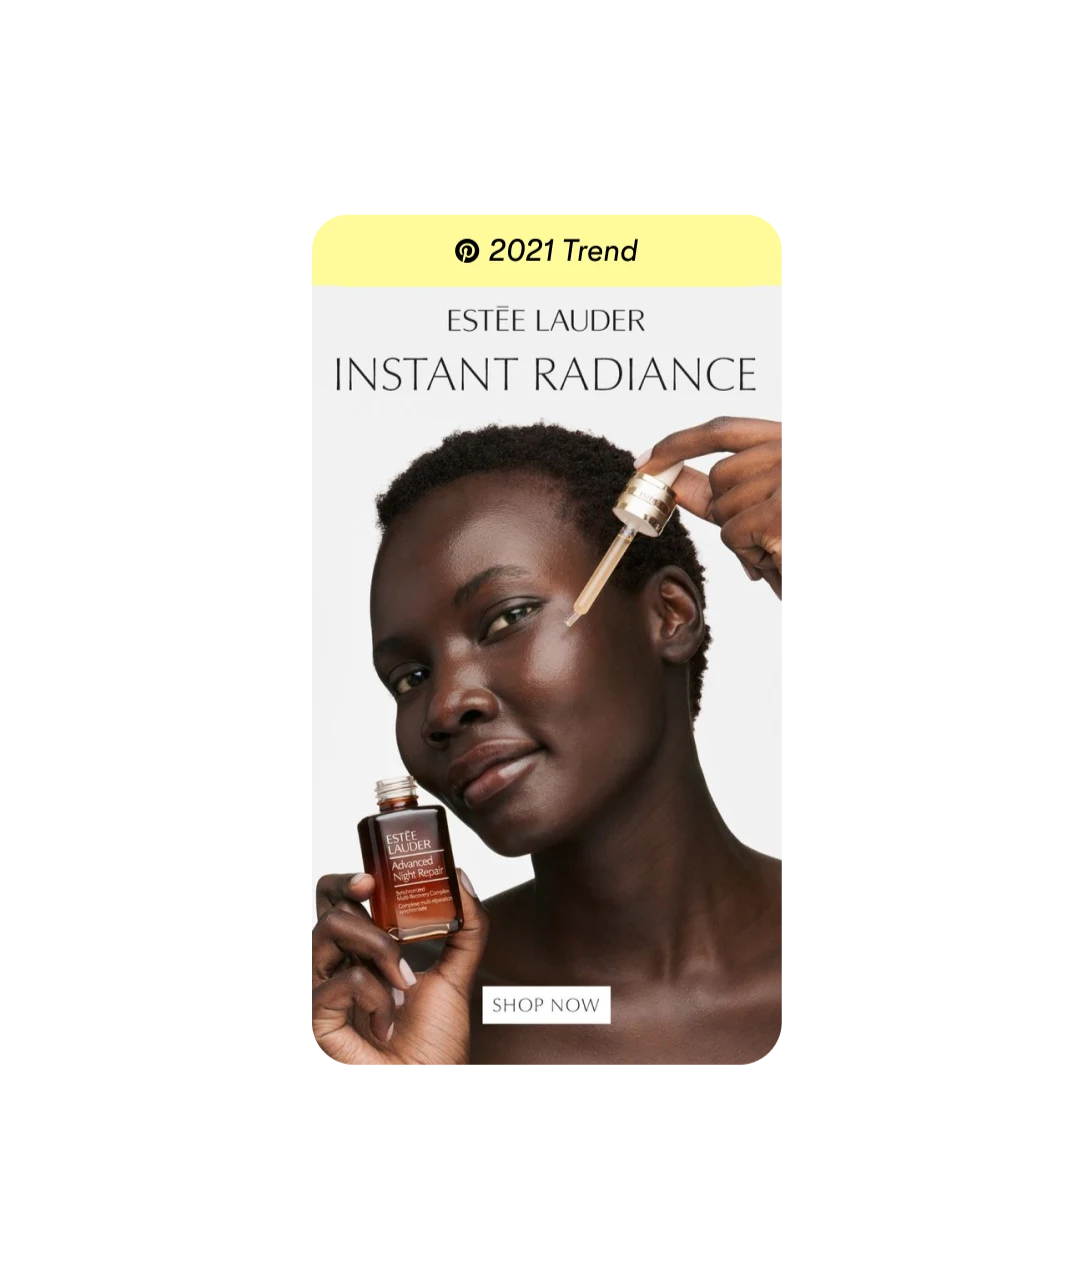 Pin titled â€œ2021 Trend: EstÃ©e Lauder Instant Radianceâ€� shows a Black woman applying serum with a â€œShop Nowâ€� button below.